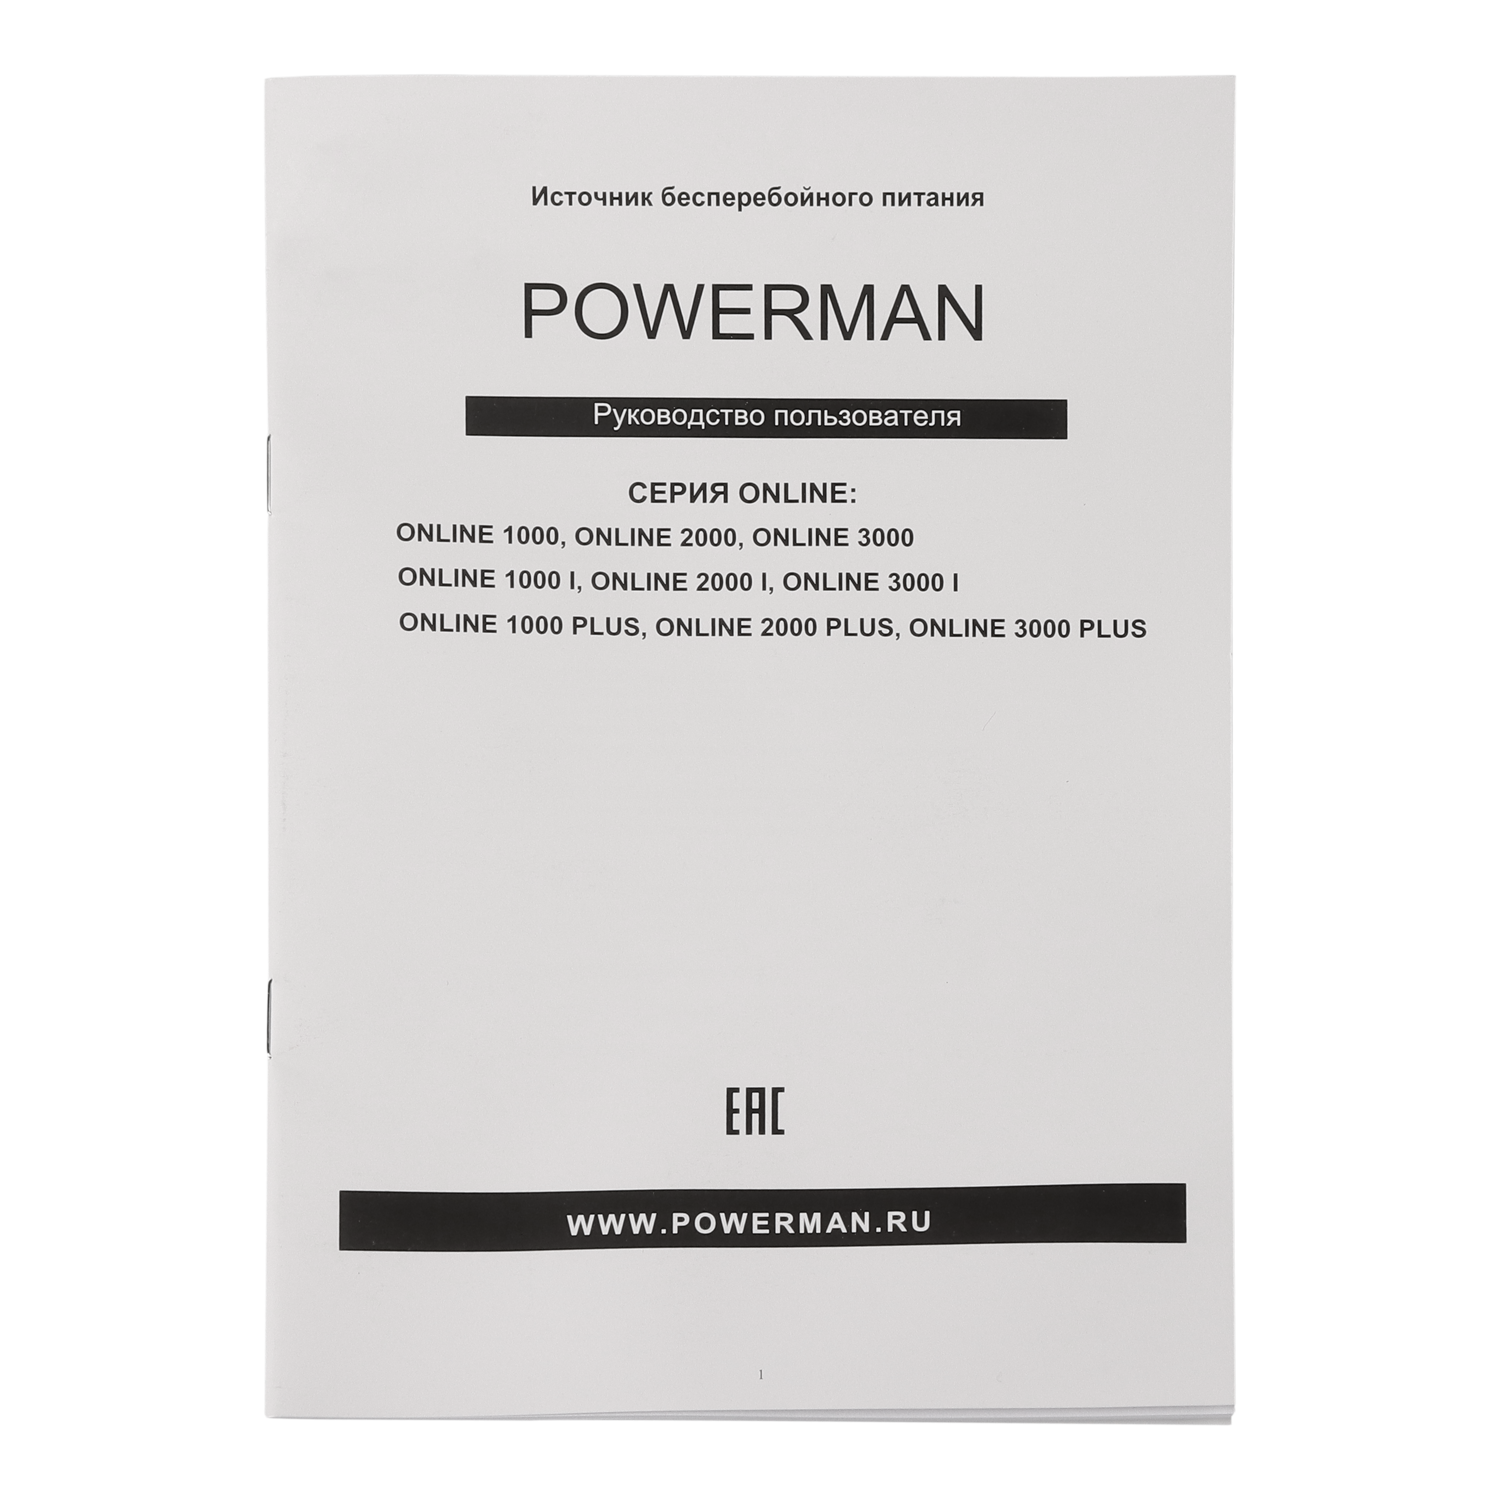 ИБП с двойным преобразованием Powerman Online 2000 Plus